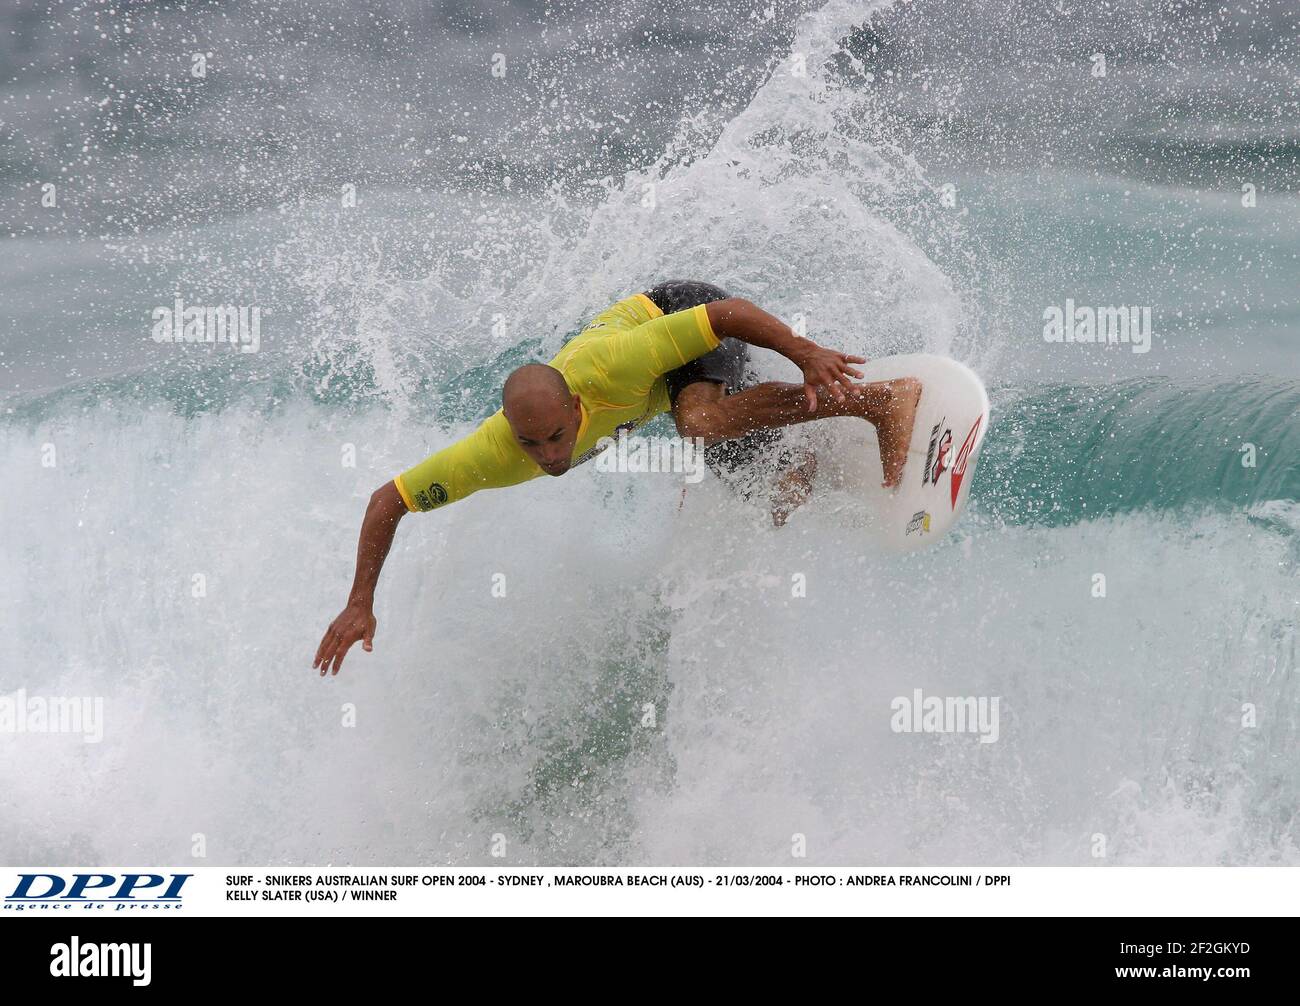 SURF - SNIKERS SURF AUSTRALIEN OUVERT 2004 - SYDNEY , PLAGE DE MAROUBRA (AUS) - 21/03/2004 - PHOTO : ANDREA FRANCOLINI / DPPI KELLY SLATER (USA) / GAGNANT Banque D'Images